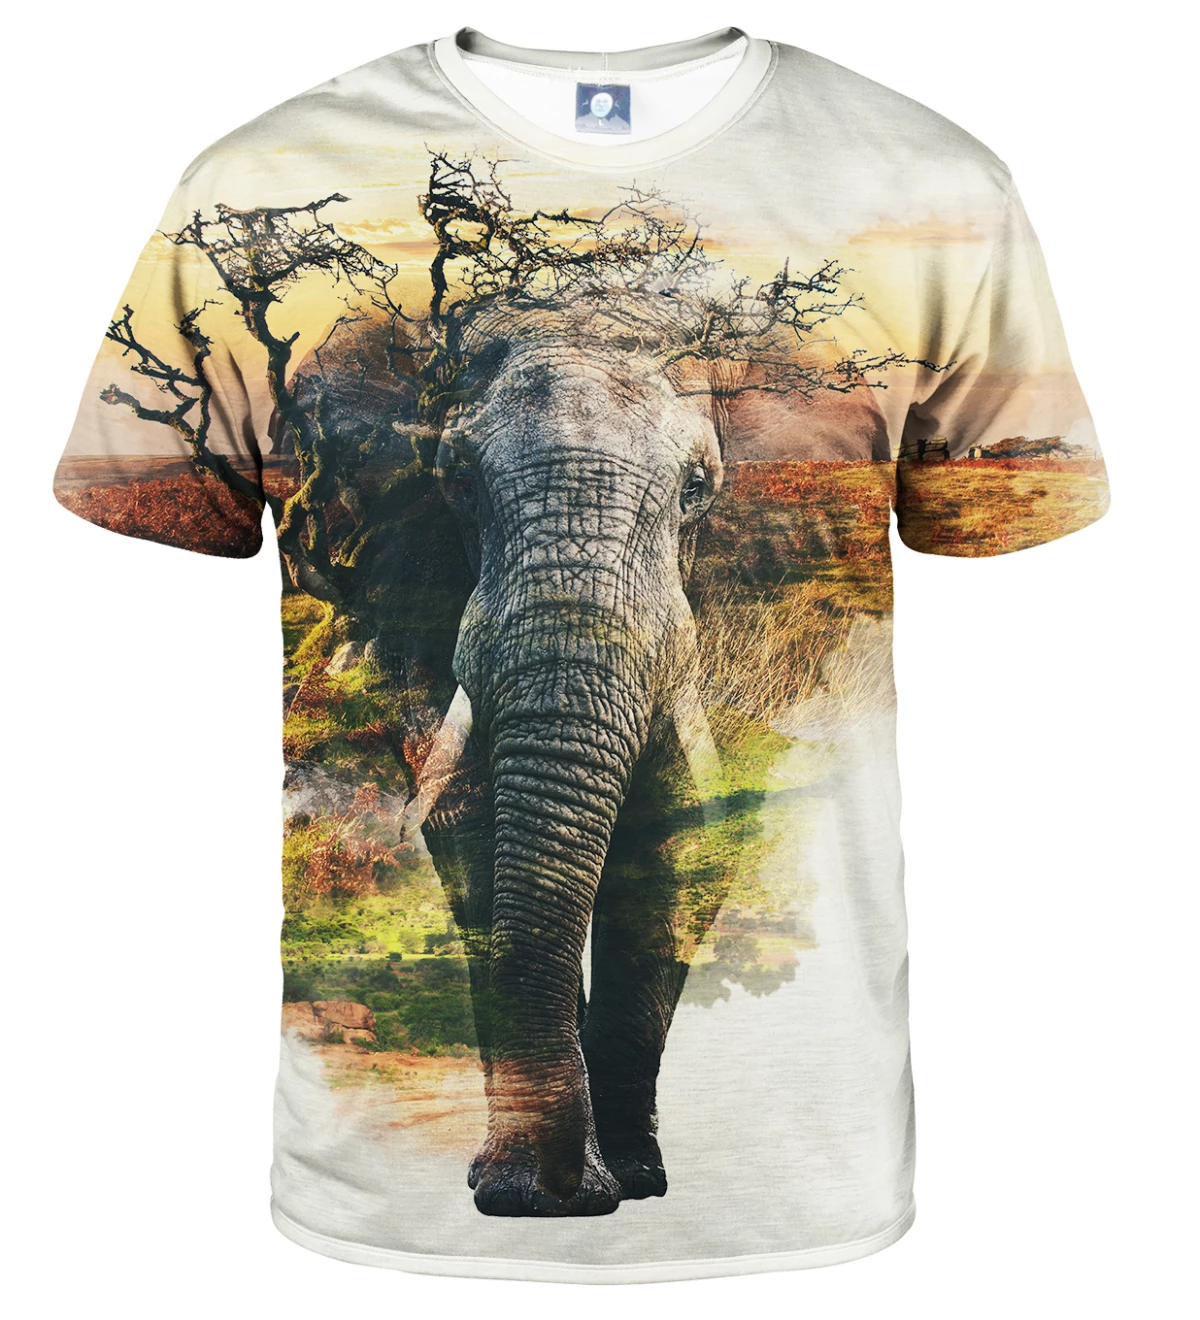 African Elephant T-shirt